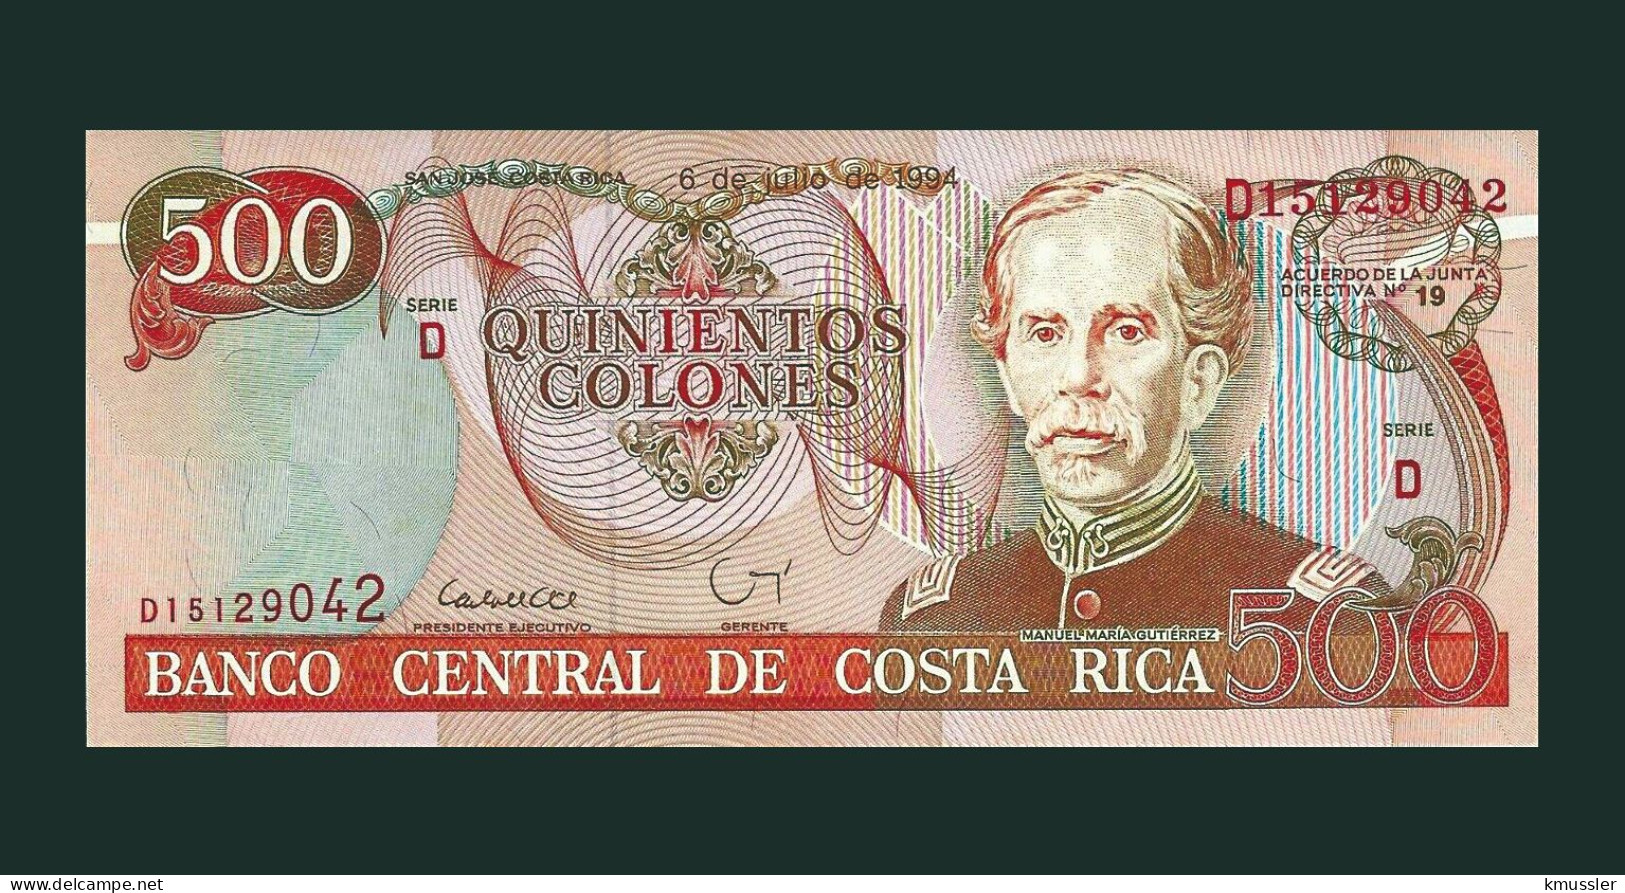 # # # Banknote Aus Costa Rica 500 Colones 1989 (P-262) UNC # # # - Costa Rica